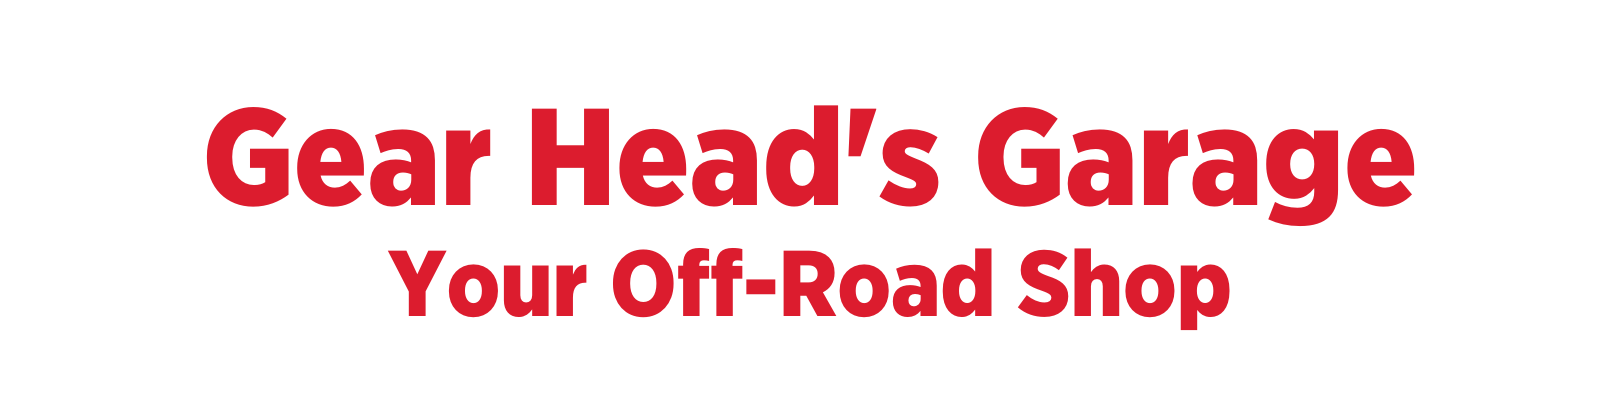 Gearhead's Garage Logo